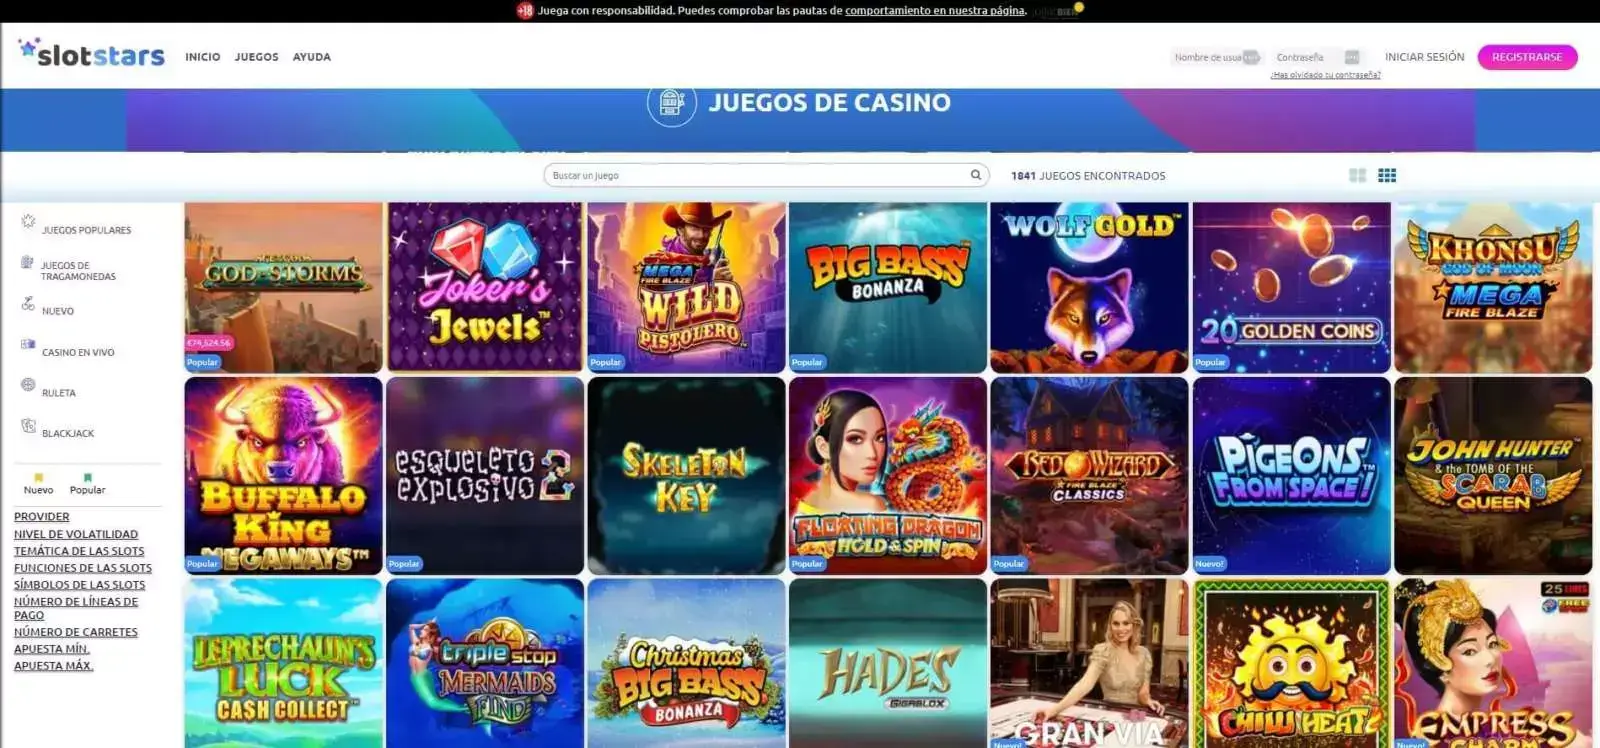 slotstars casino online paypal en espana